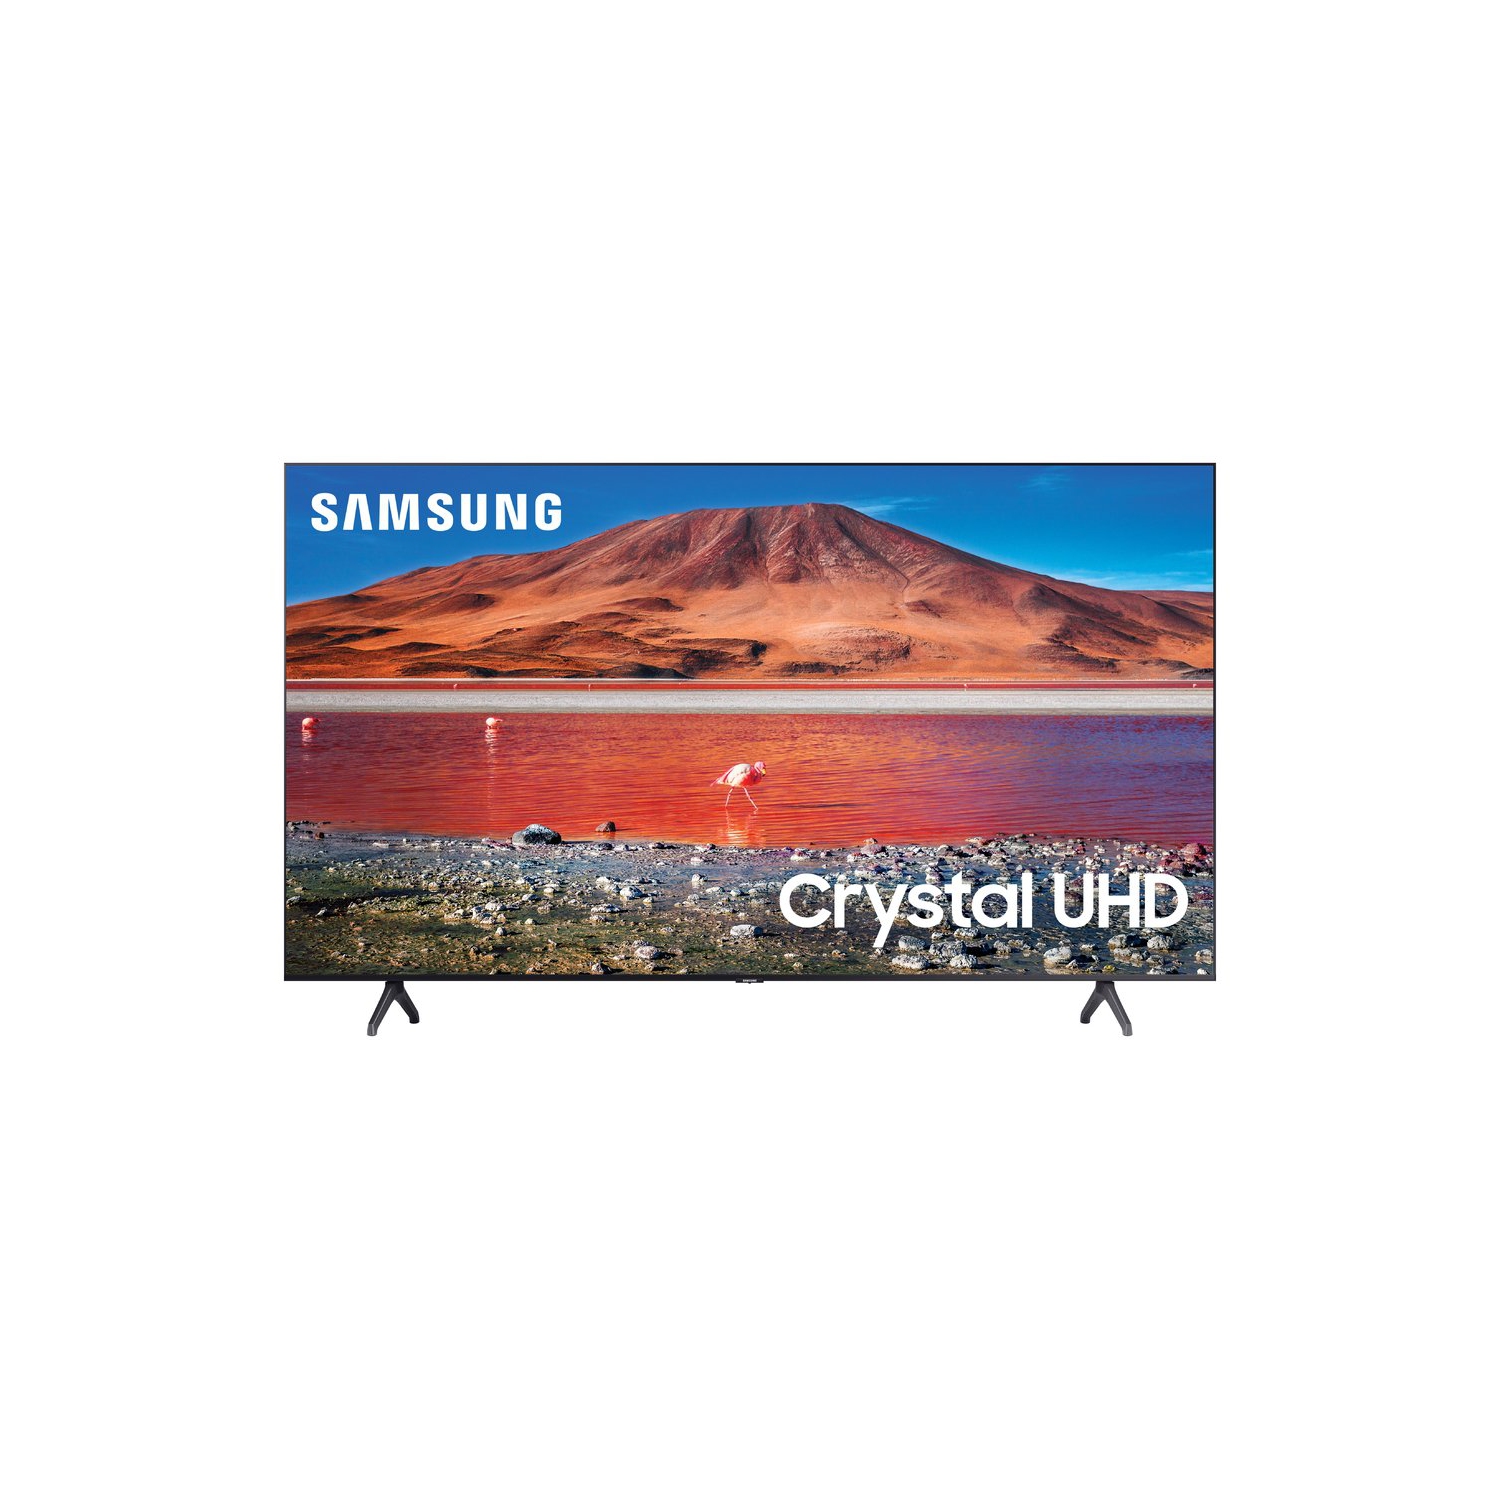 Refurbished (Good) - SAMSUNG 60" Class 4K Crystal UHD (2160p) LED Smart TV with HDR (UN60TU7000)